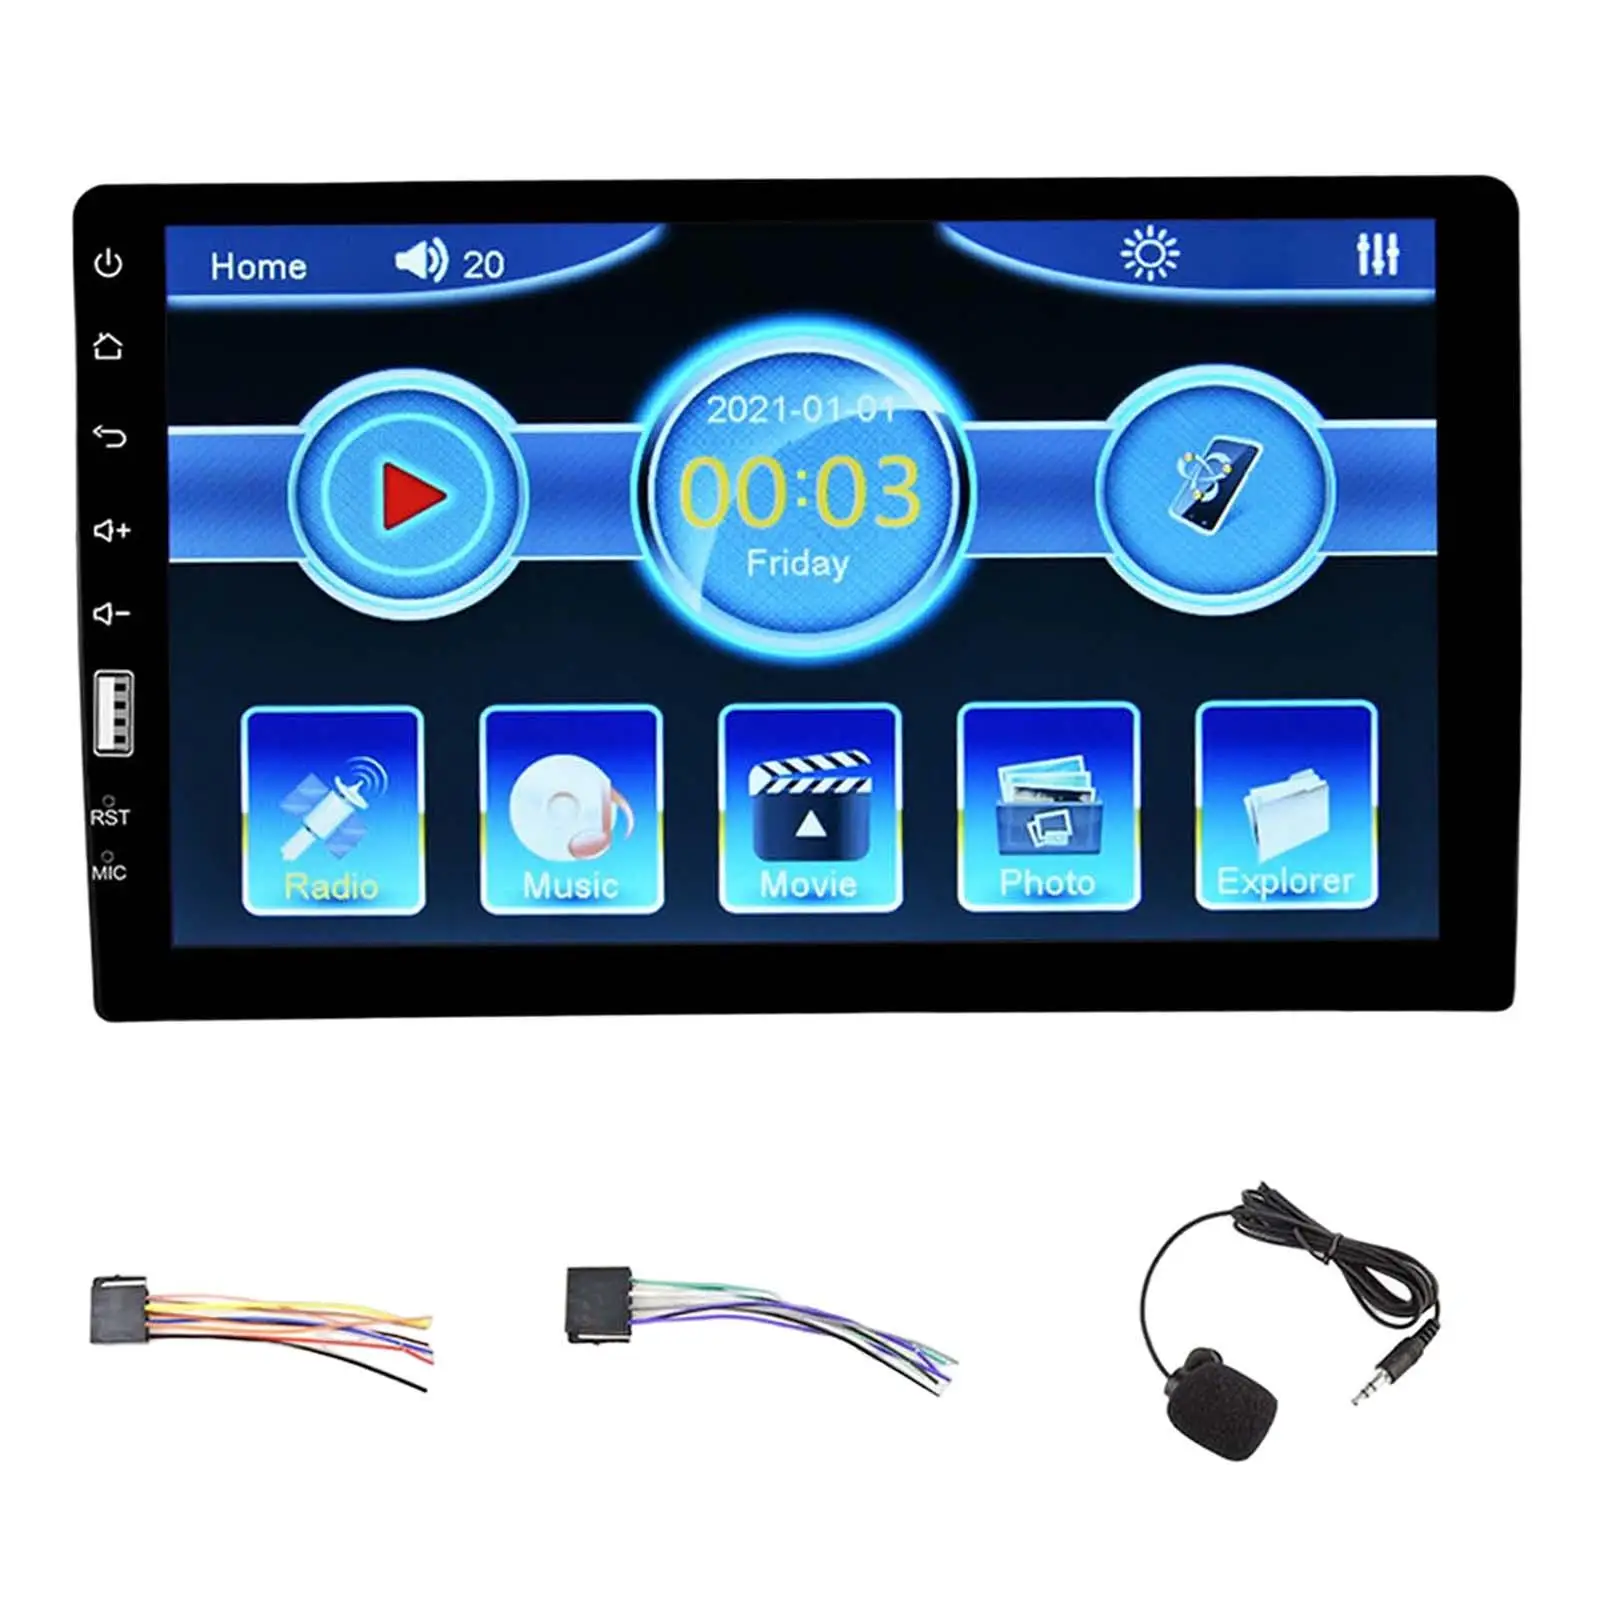 Vehicle Audio Receiver Handsfree Calling Camera Reversing Function FM Radio USB Multimedia Player for Auto Vehicles SUV Trucks